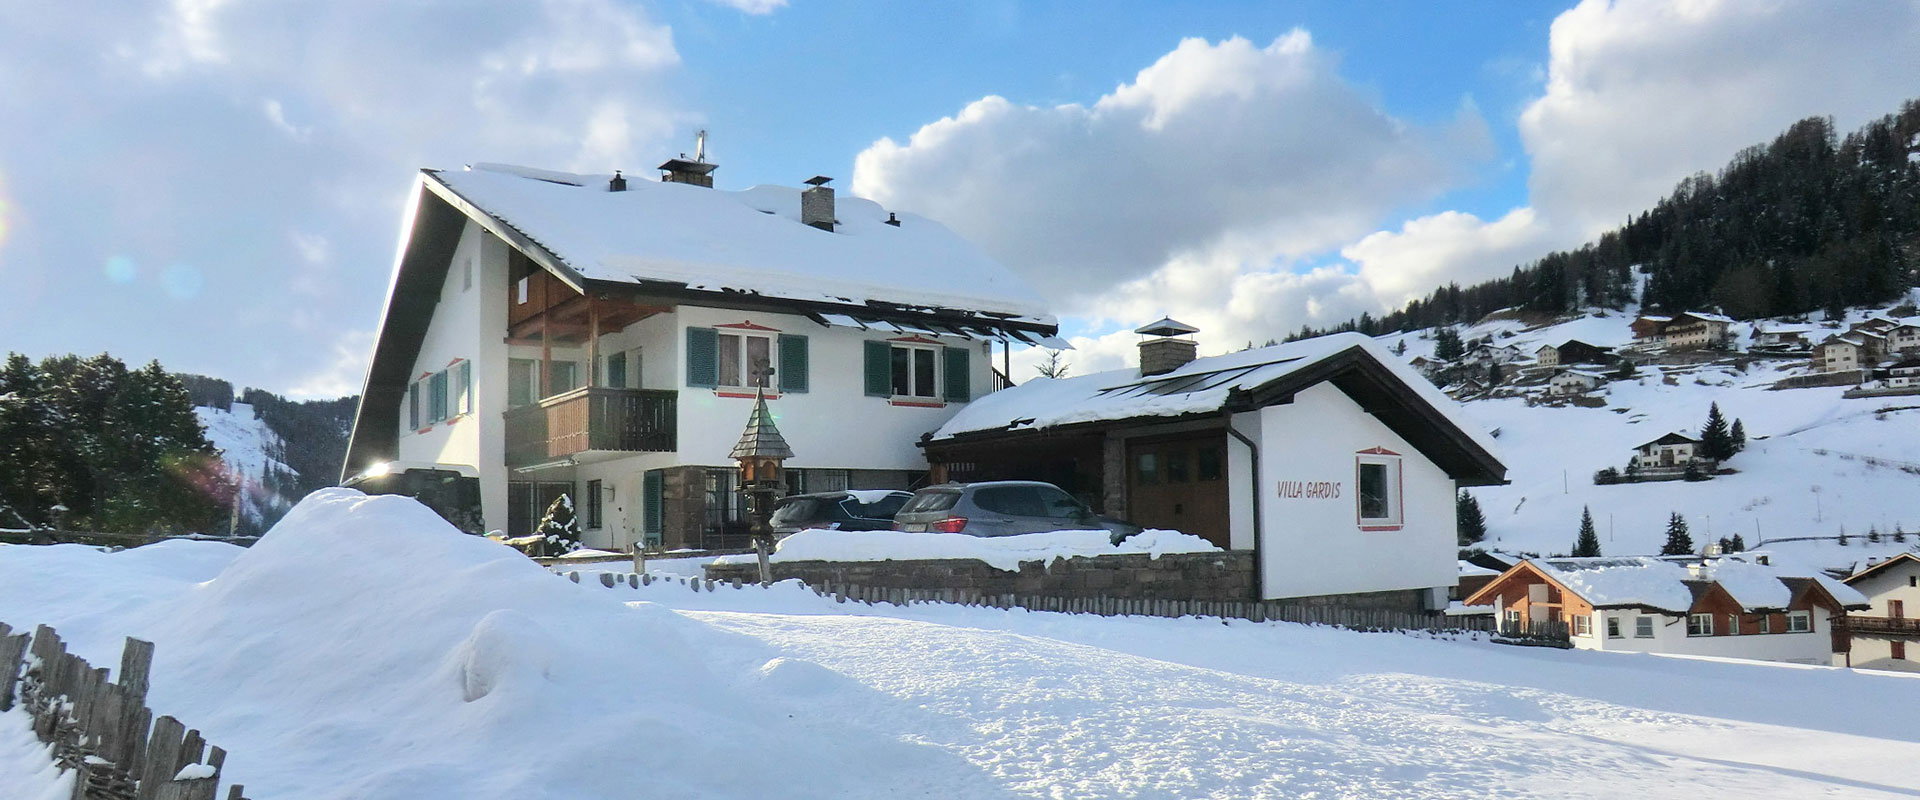 Villa Gardis Winter